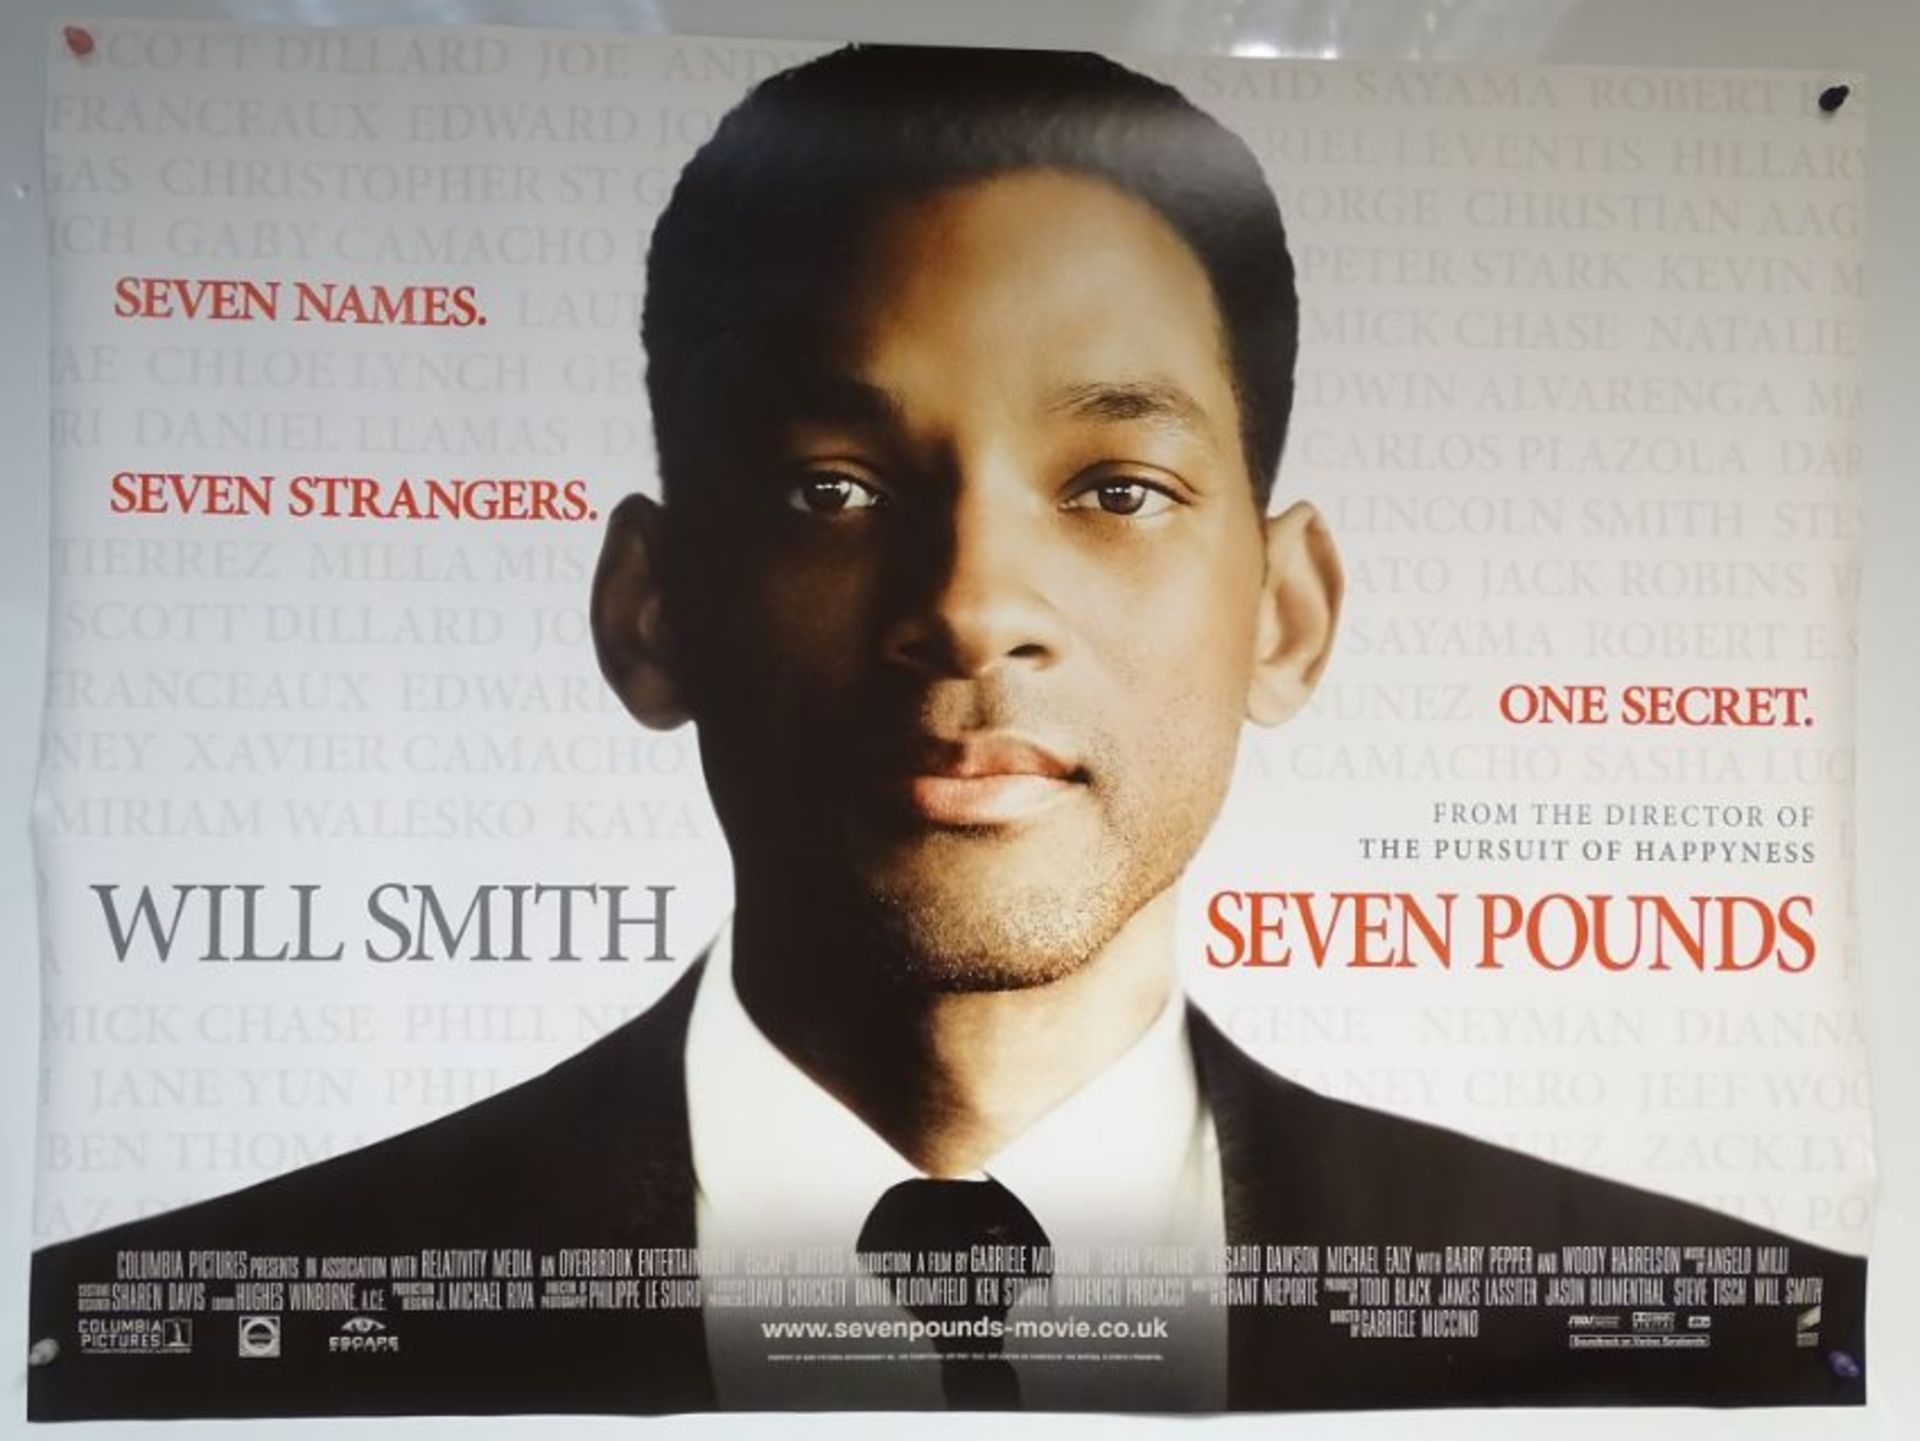 5 x UK Cinema Movie Posters comprising 1 x Seven Pounds (2009) - Drama / Romance - Will Smith /